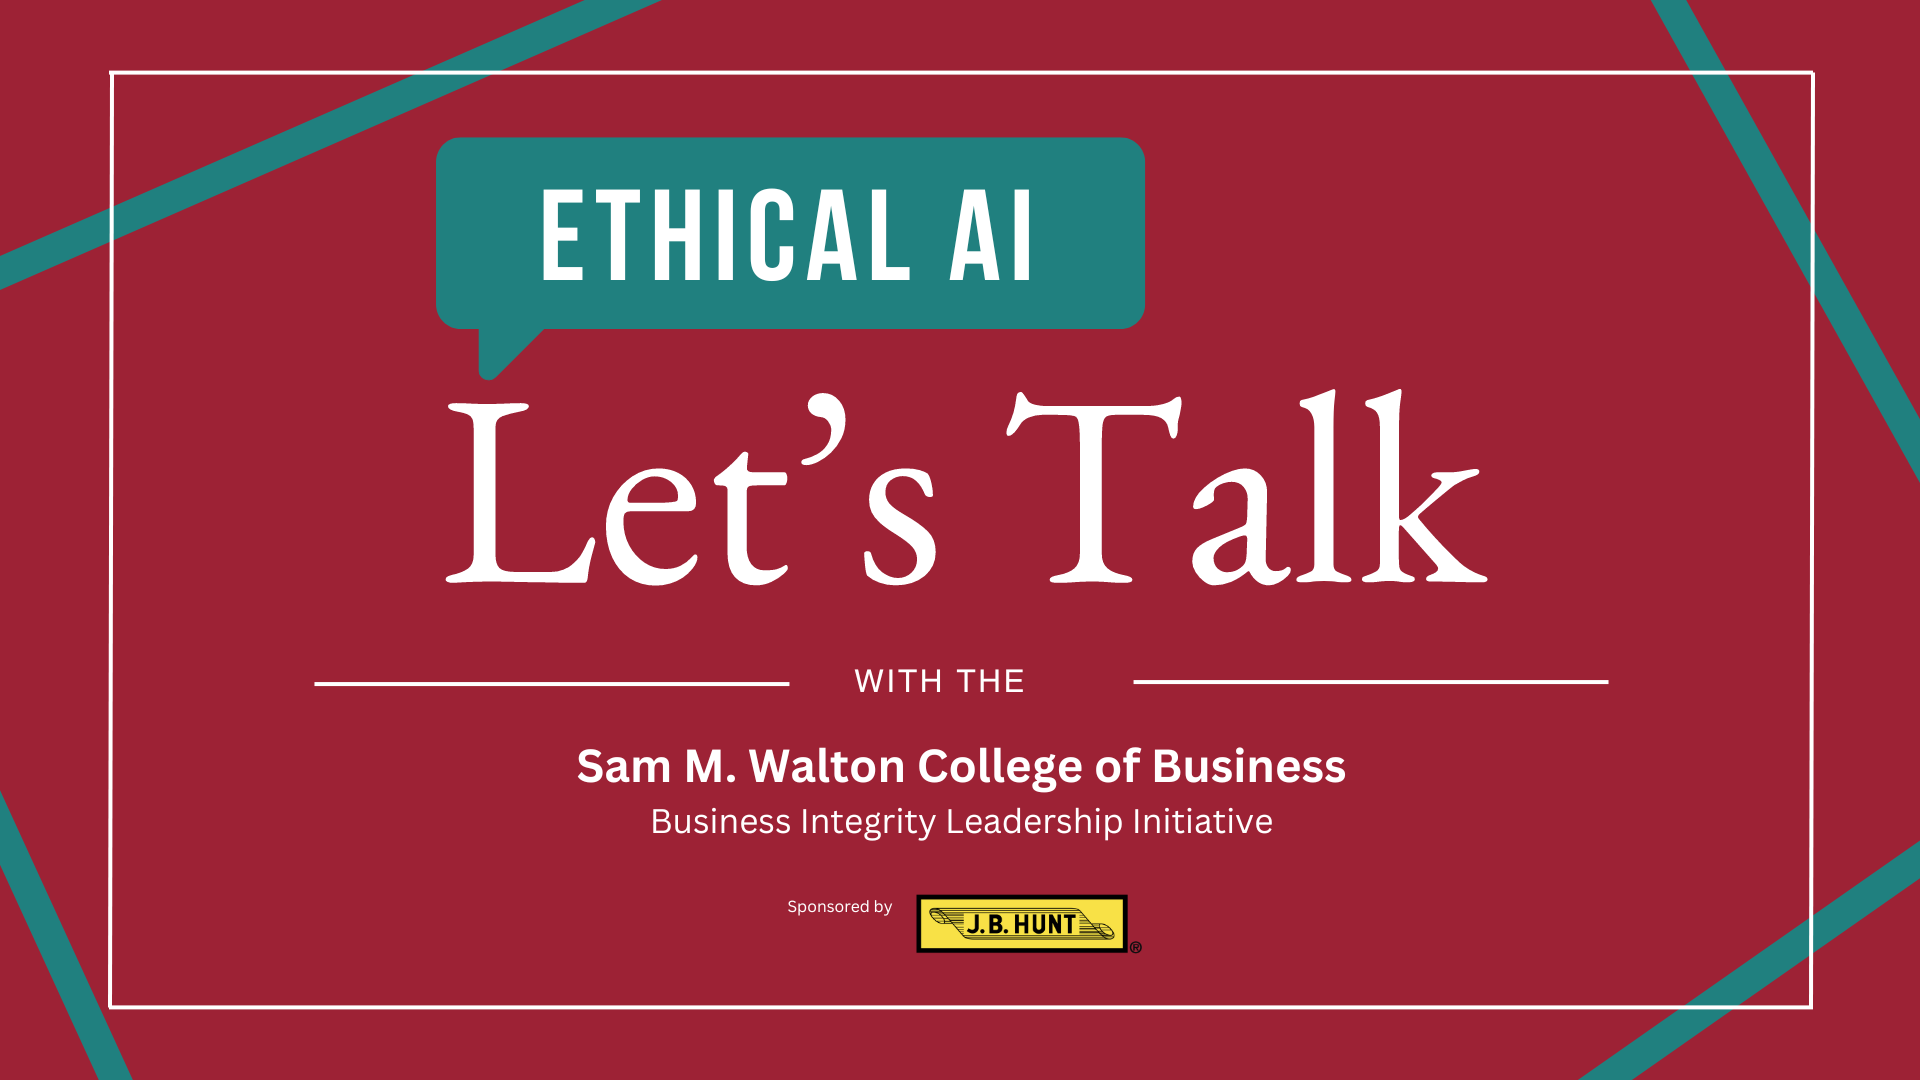 Program Overview: Let’s Talk about Ethical AI Program